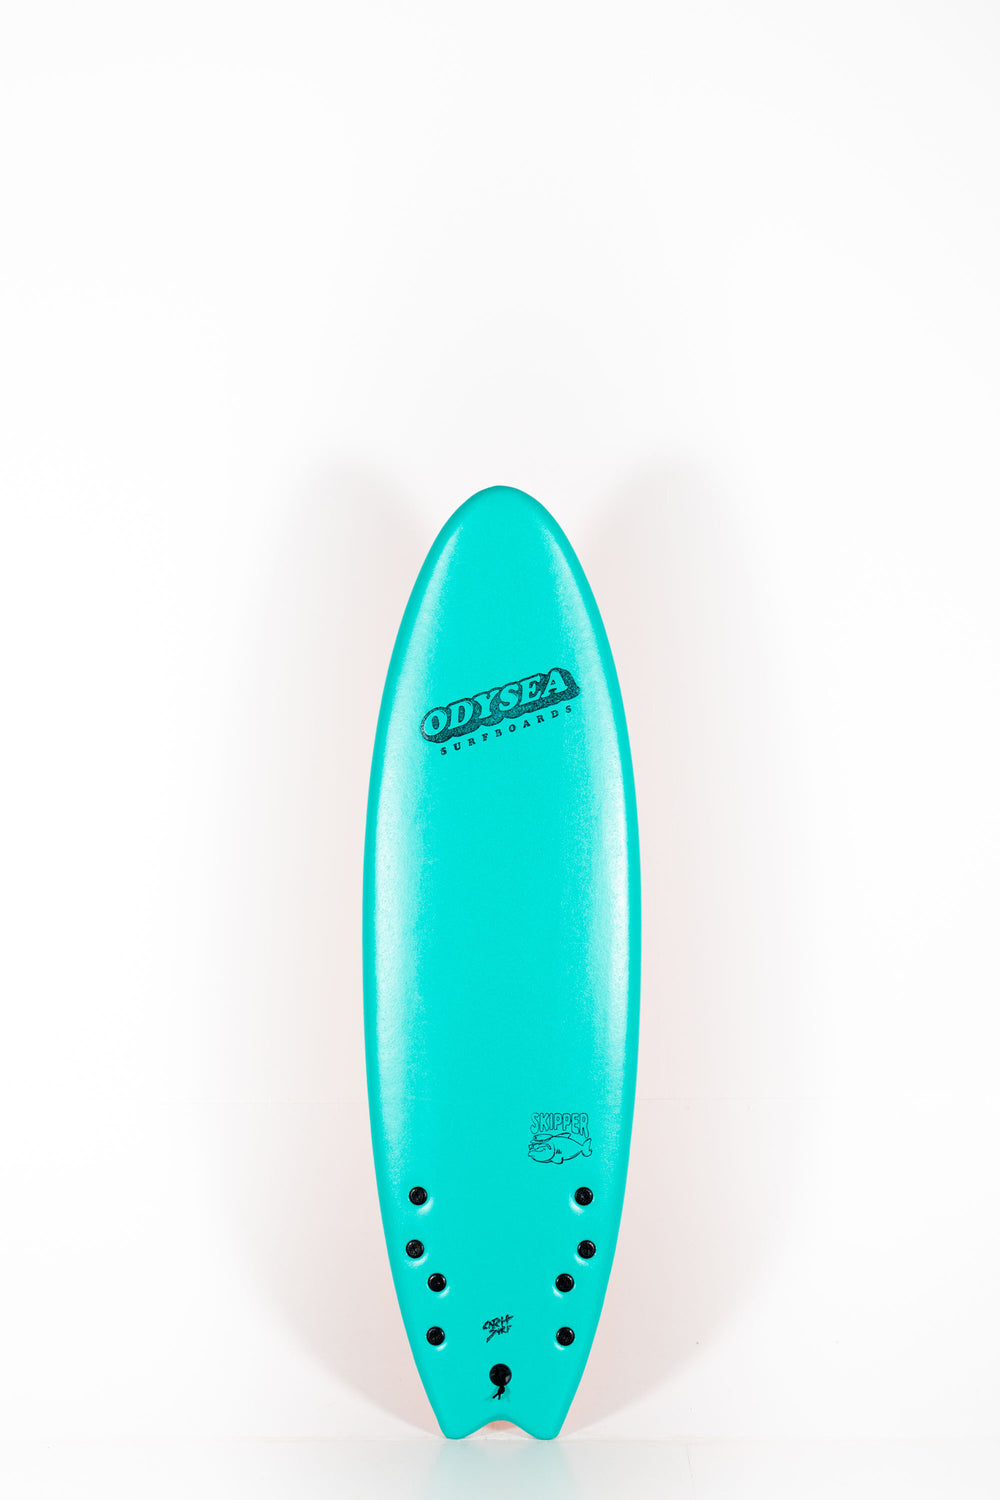 Pukas Surf Shop - Catch Surf - ODYSEA 60 SKIPPER QUAD - 6'0